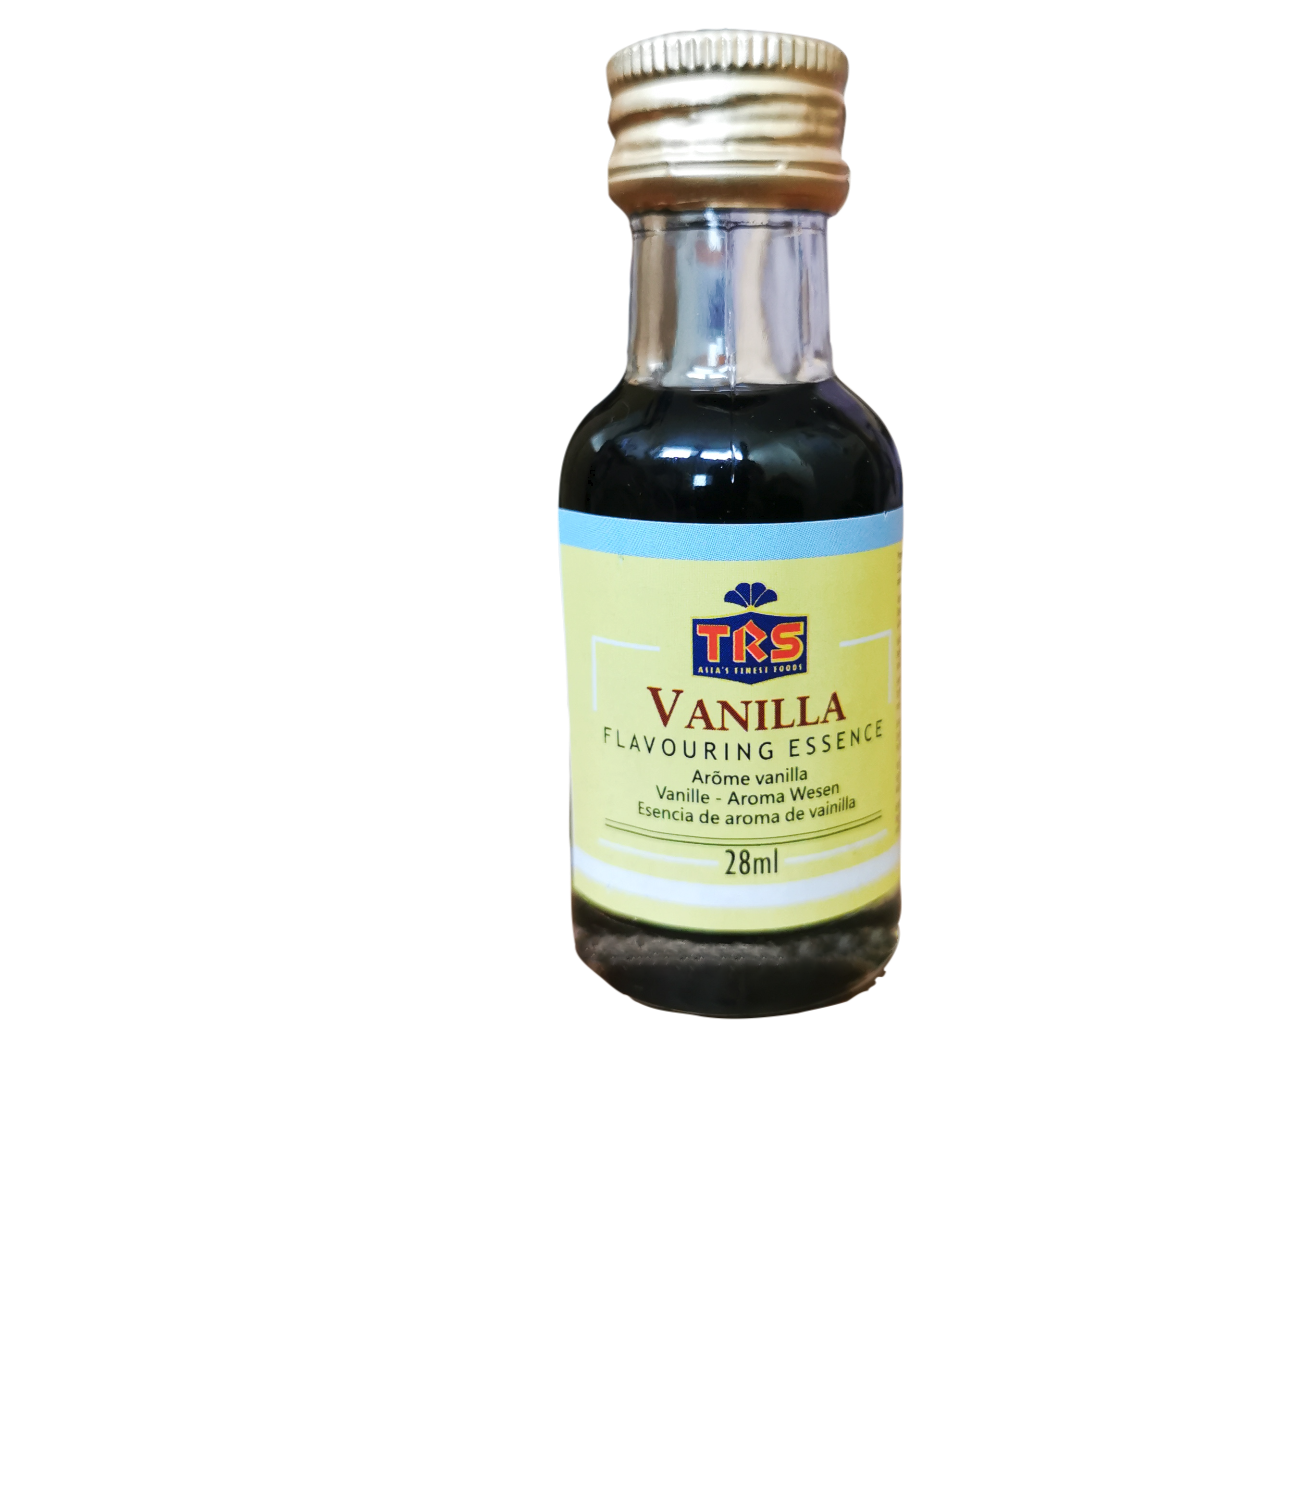 TRS Vanilla Flavouring Essence 